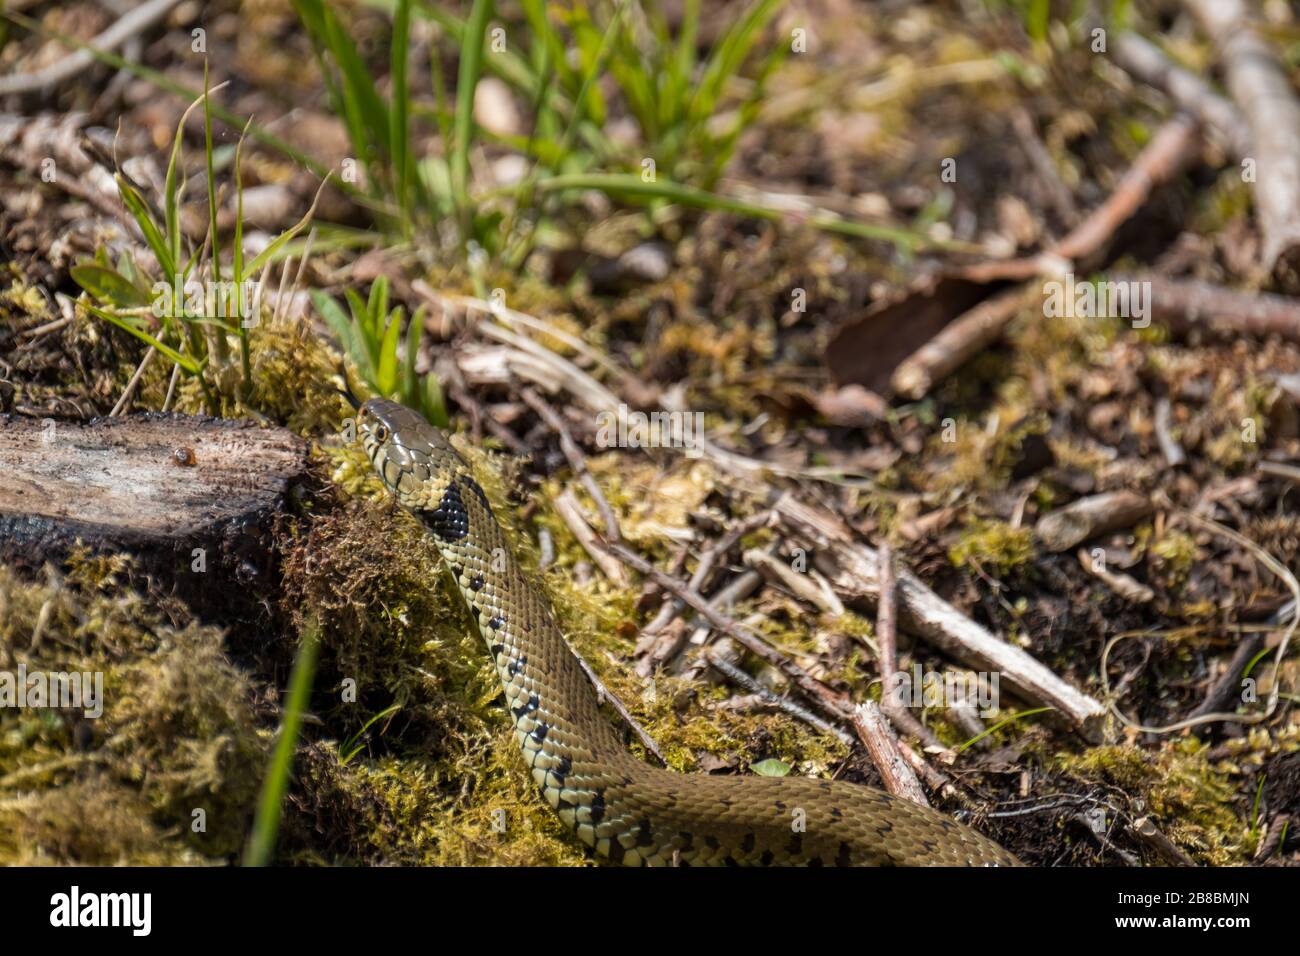 Grass snake (Natrix natrix) emerging from a leafy pond Stock Photo